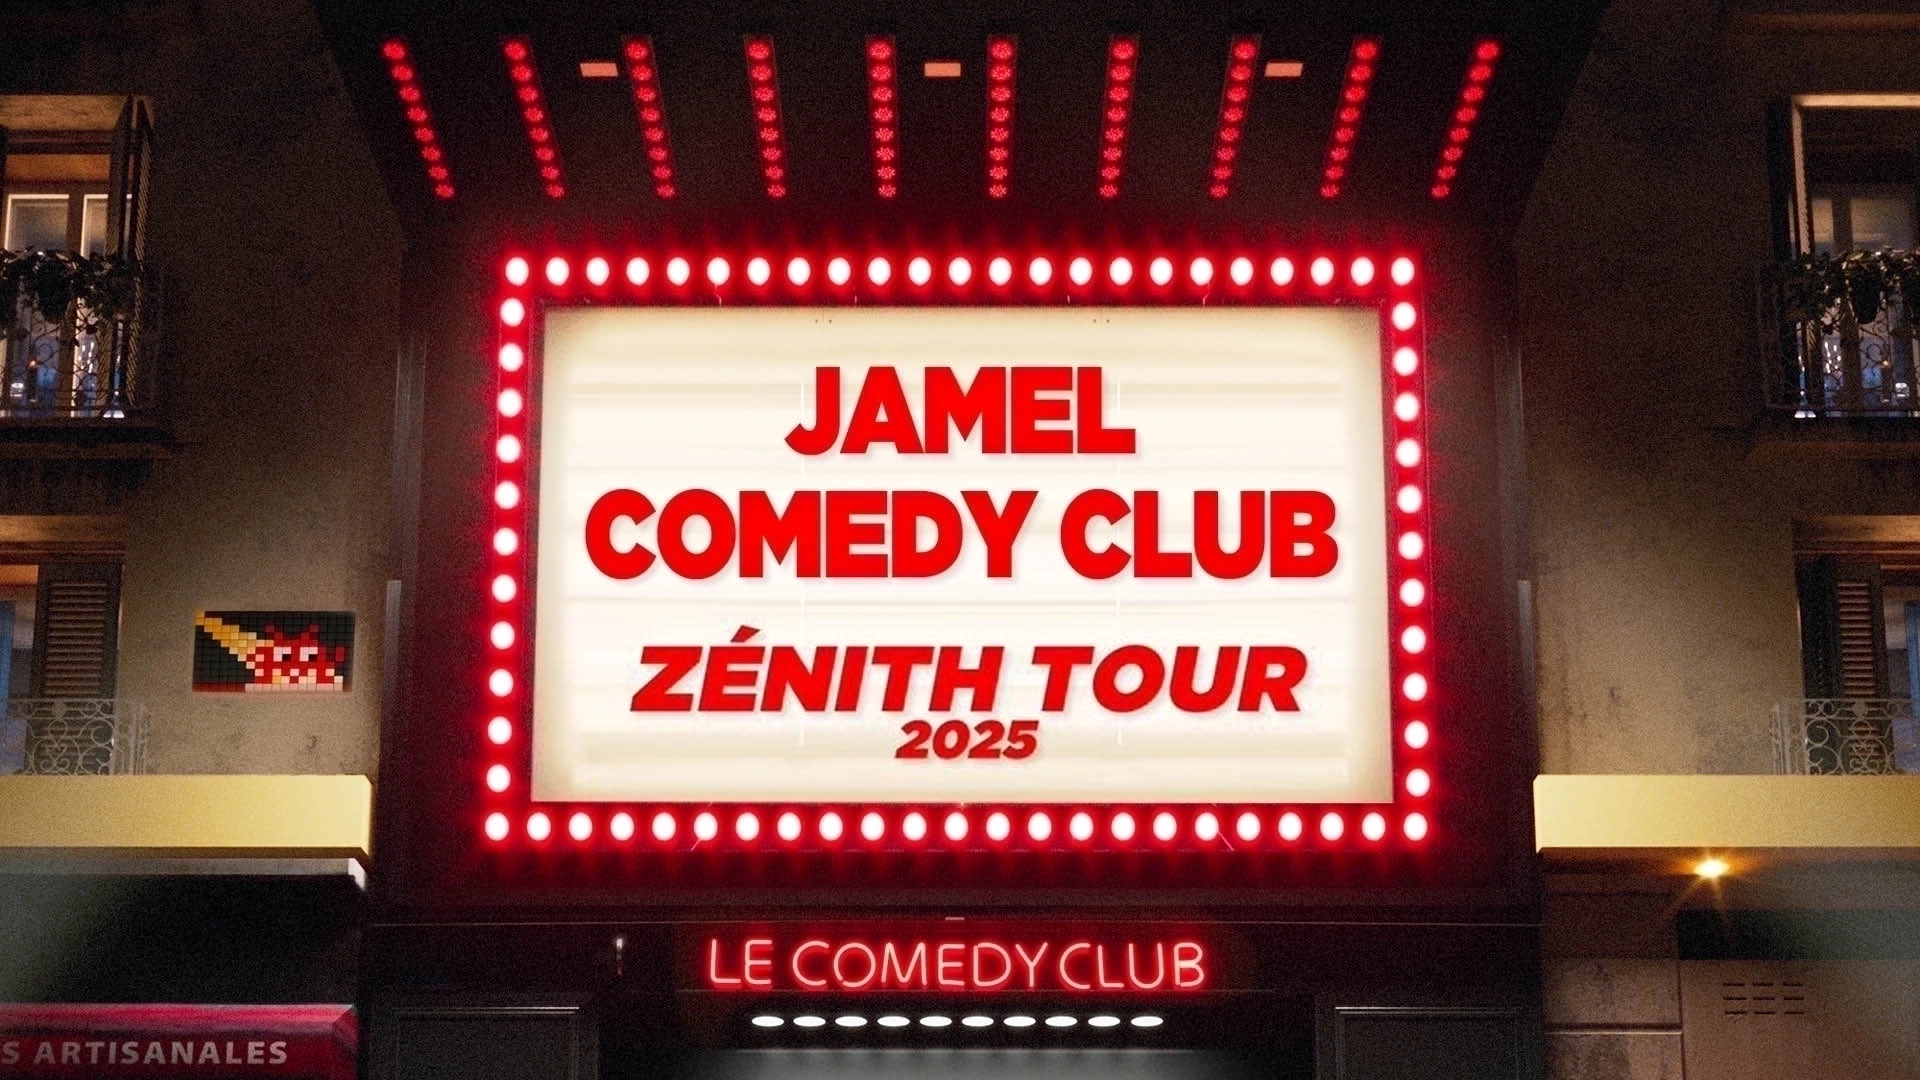 Jamel Comedy Club Zenith Tour 2025 en Palais Nikaia Tickets